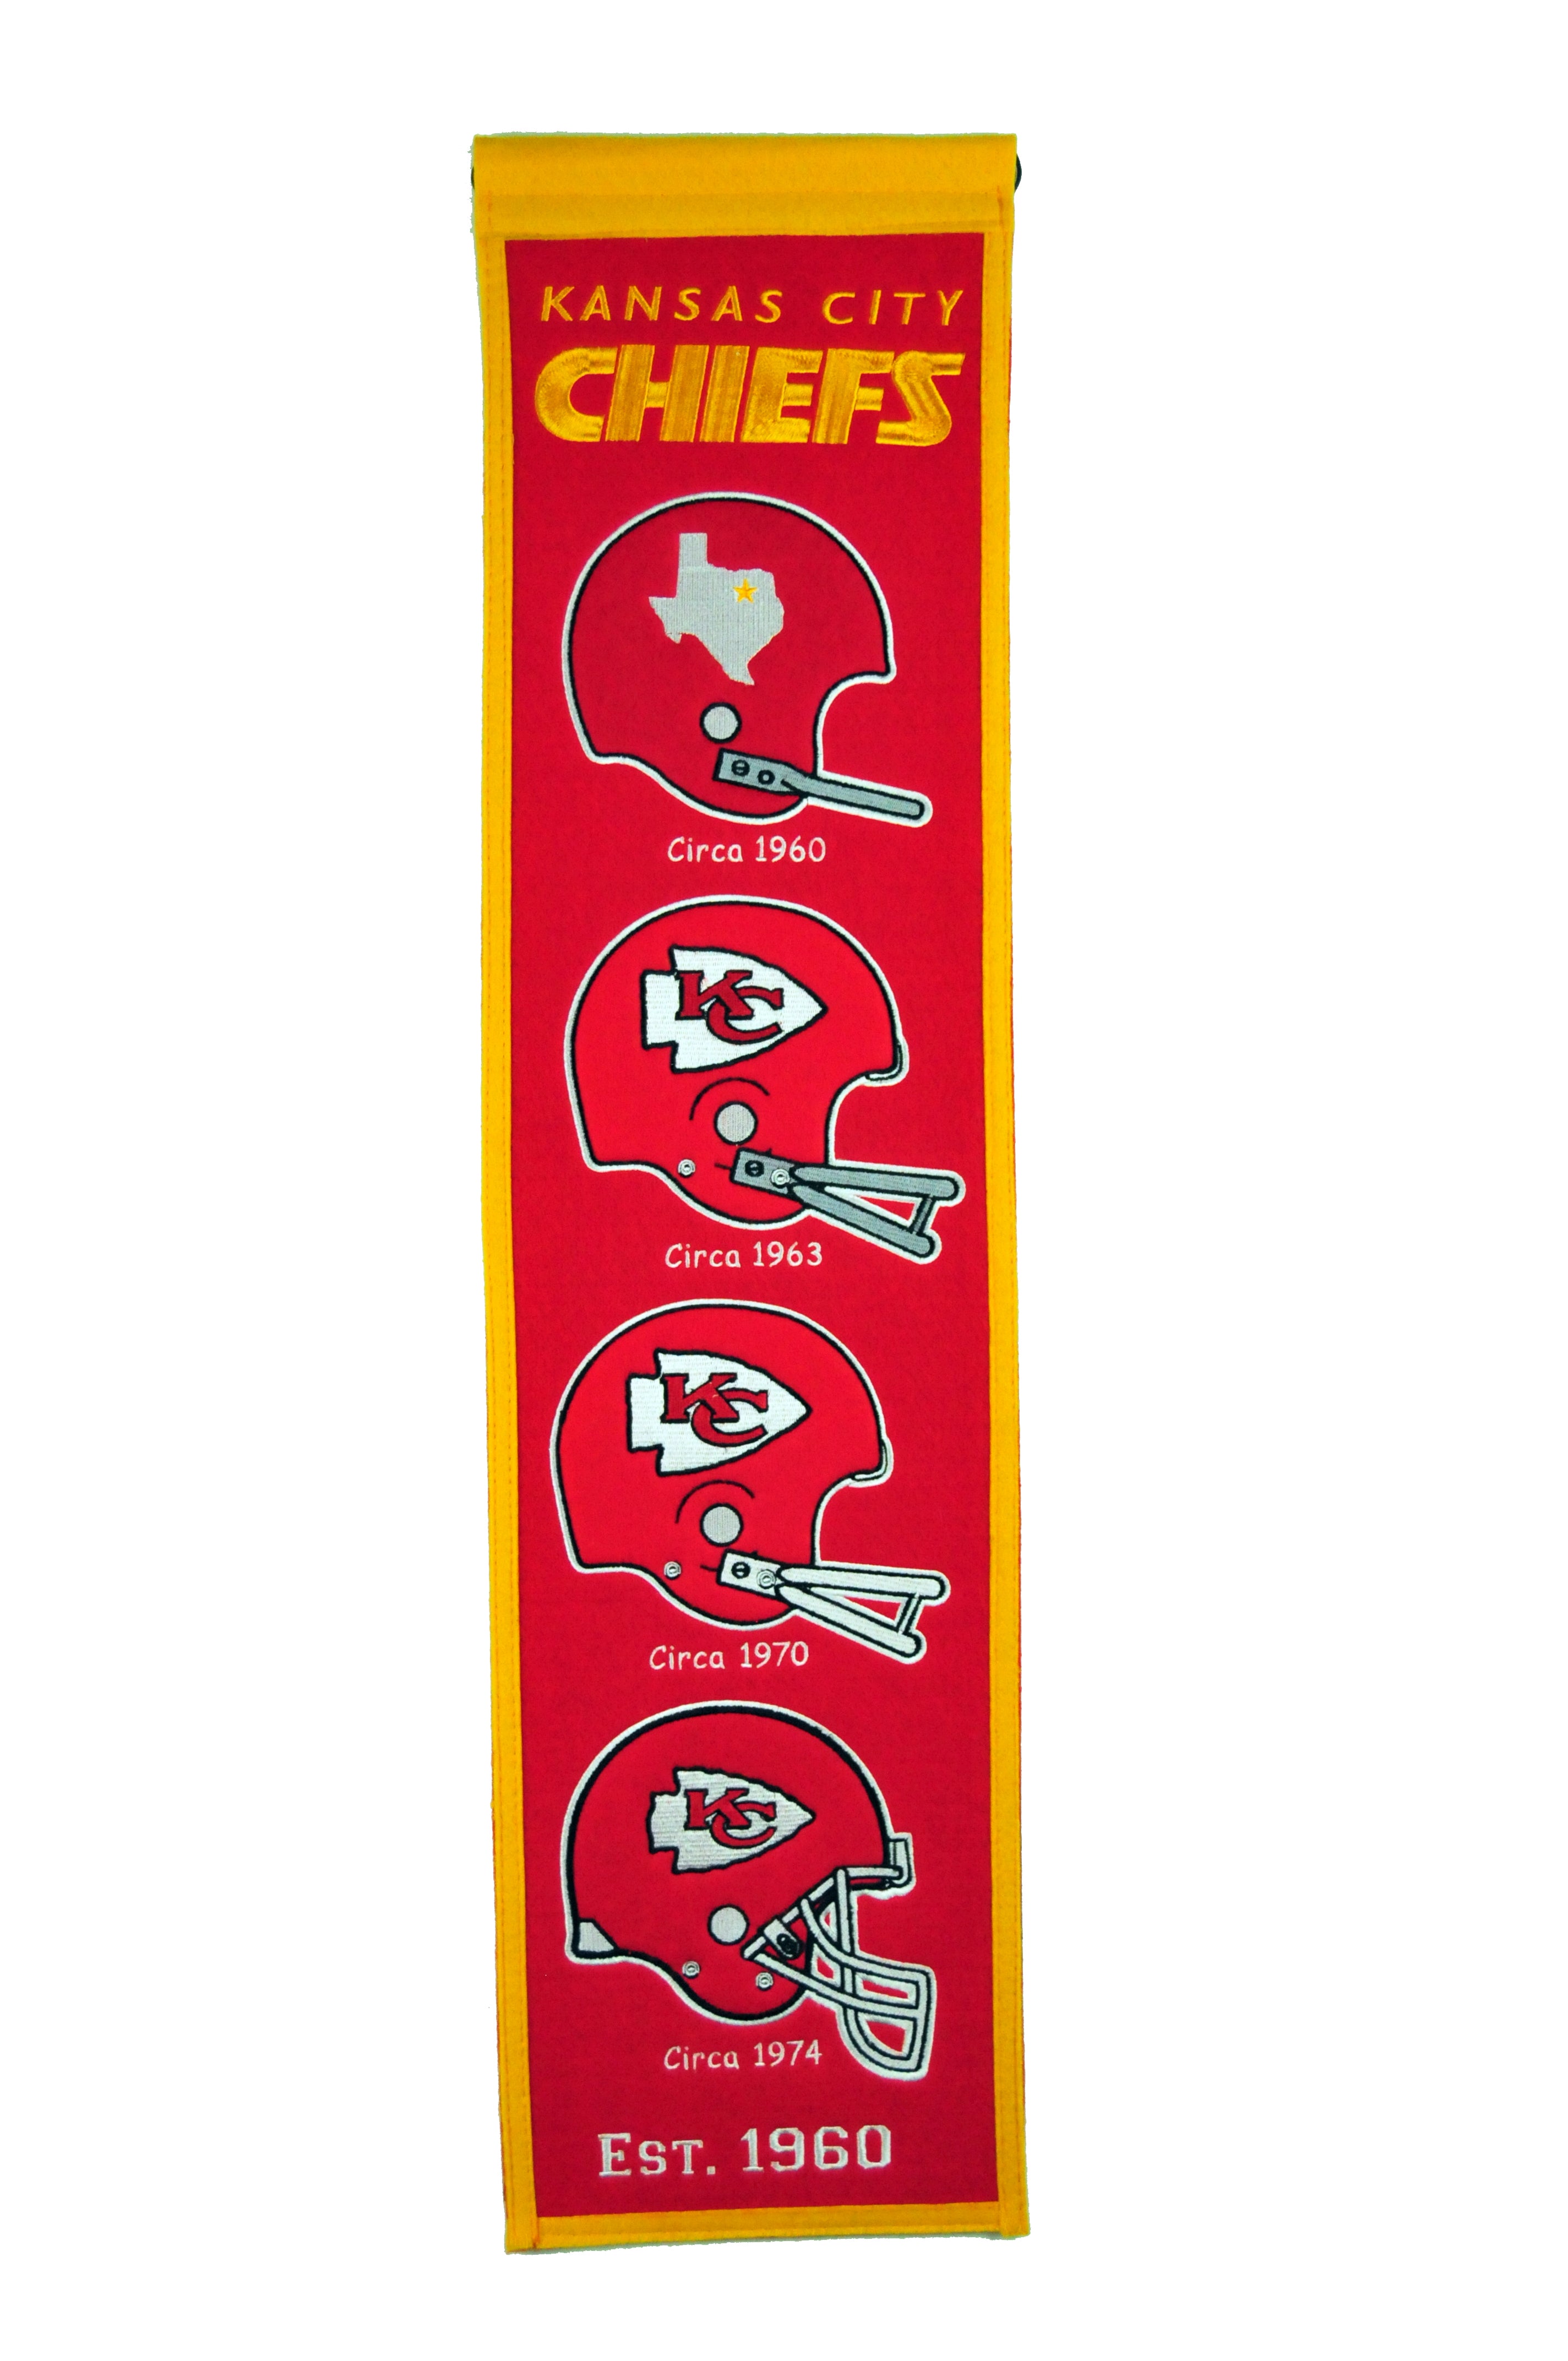 Kansas City Chiefs Heritage Banner